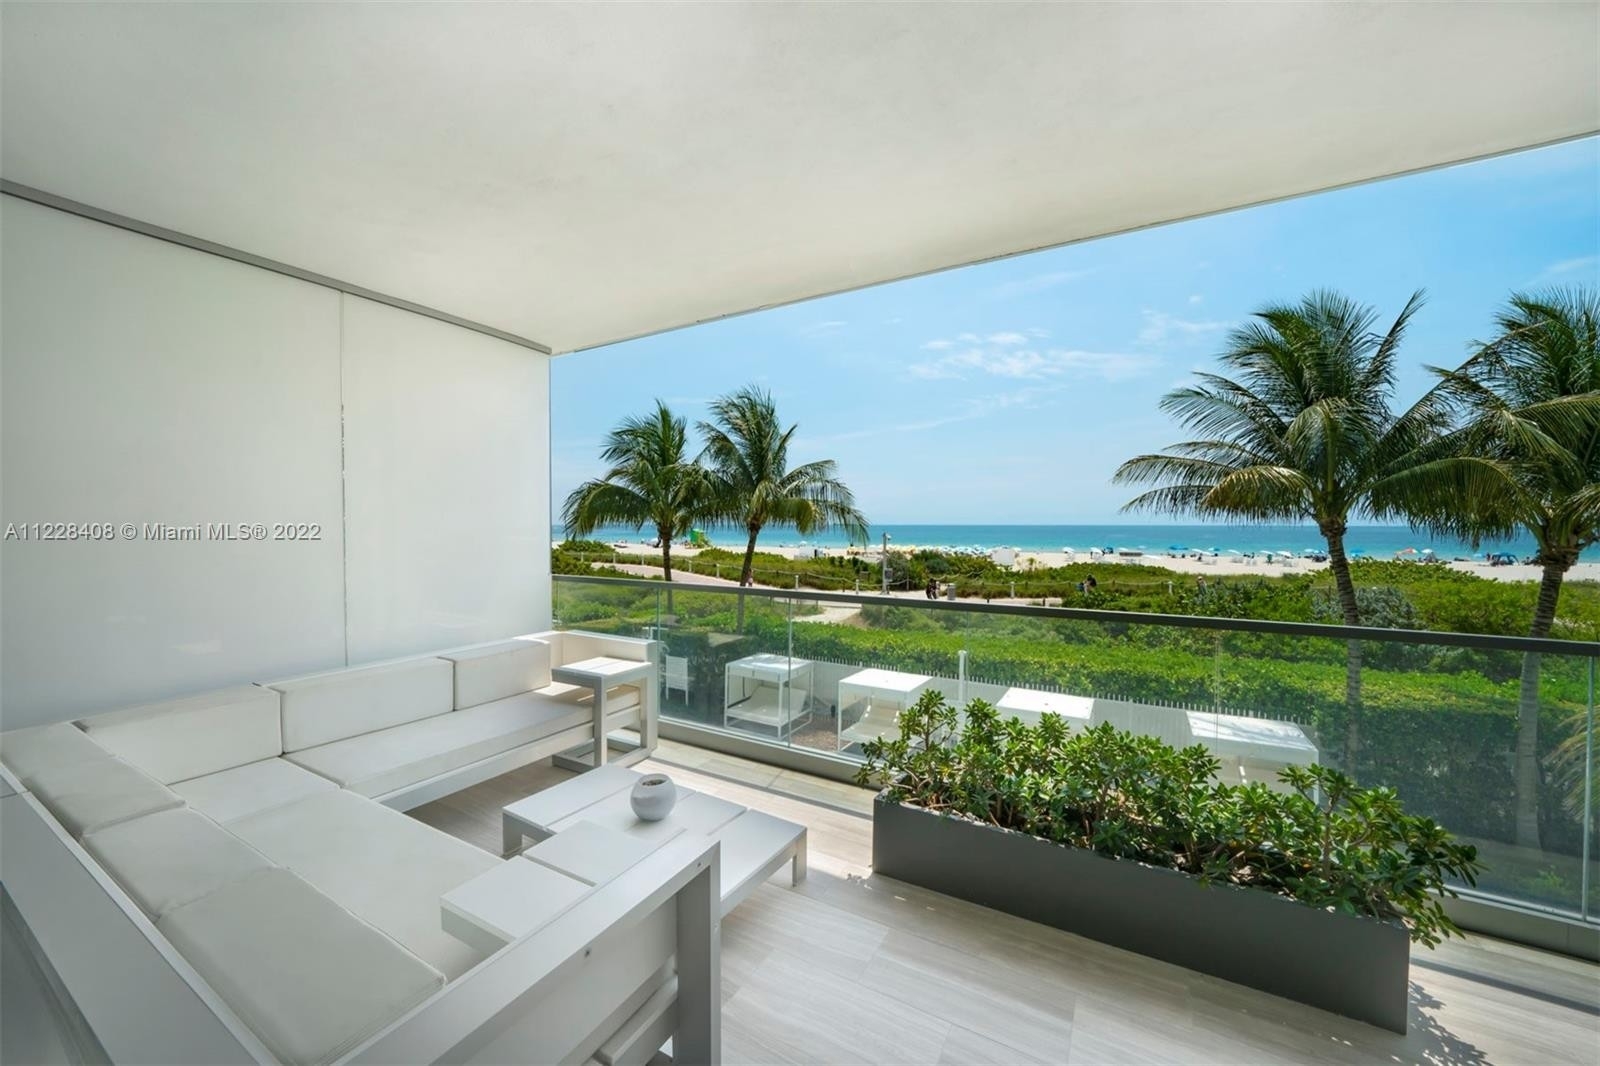 12. Condominiums at 321 Ocean Dr, 200 Miami Beach